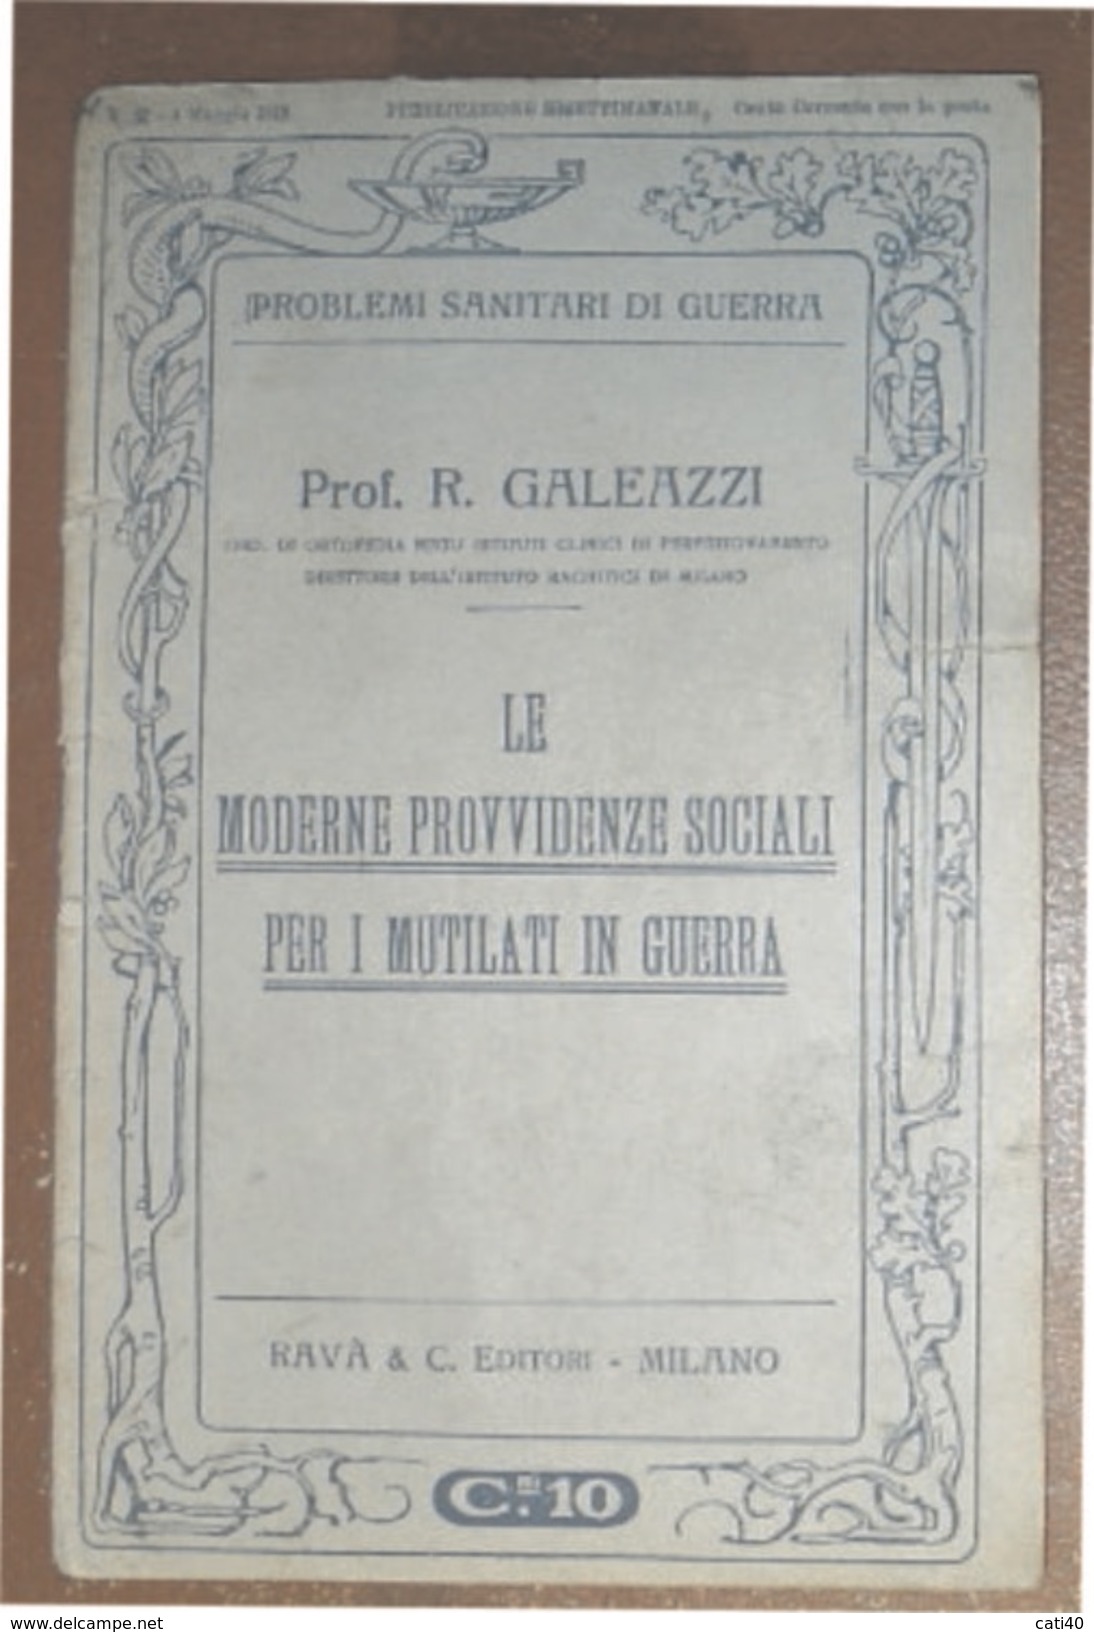 PROBLEMI SANITARI DI GUERRA PREVIDENZE PER I MUTILATI DI GUERRA  RAVA'  EDITORE 1915 DEL PROF. R. GALEAZZI - Guerre 1914-18